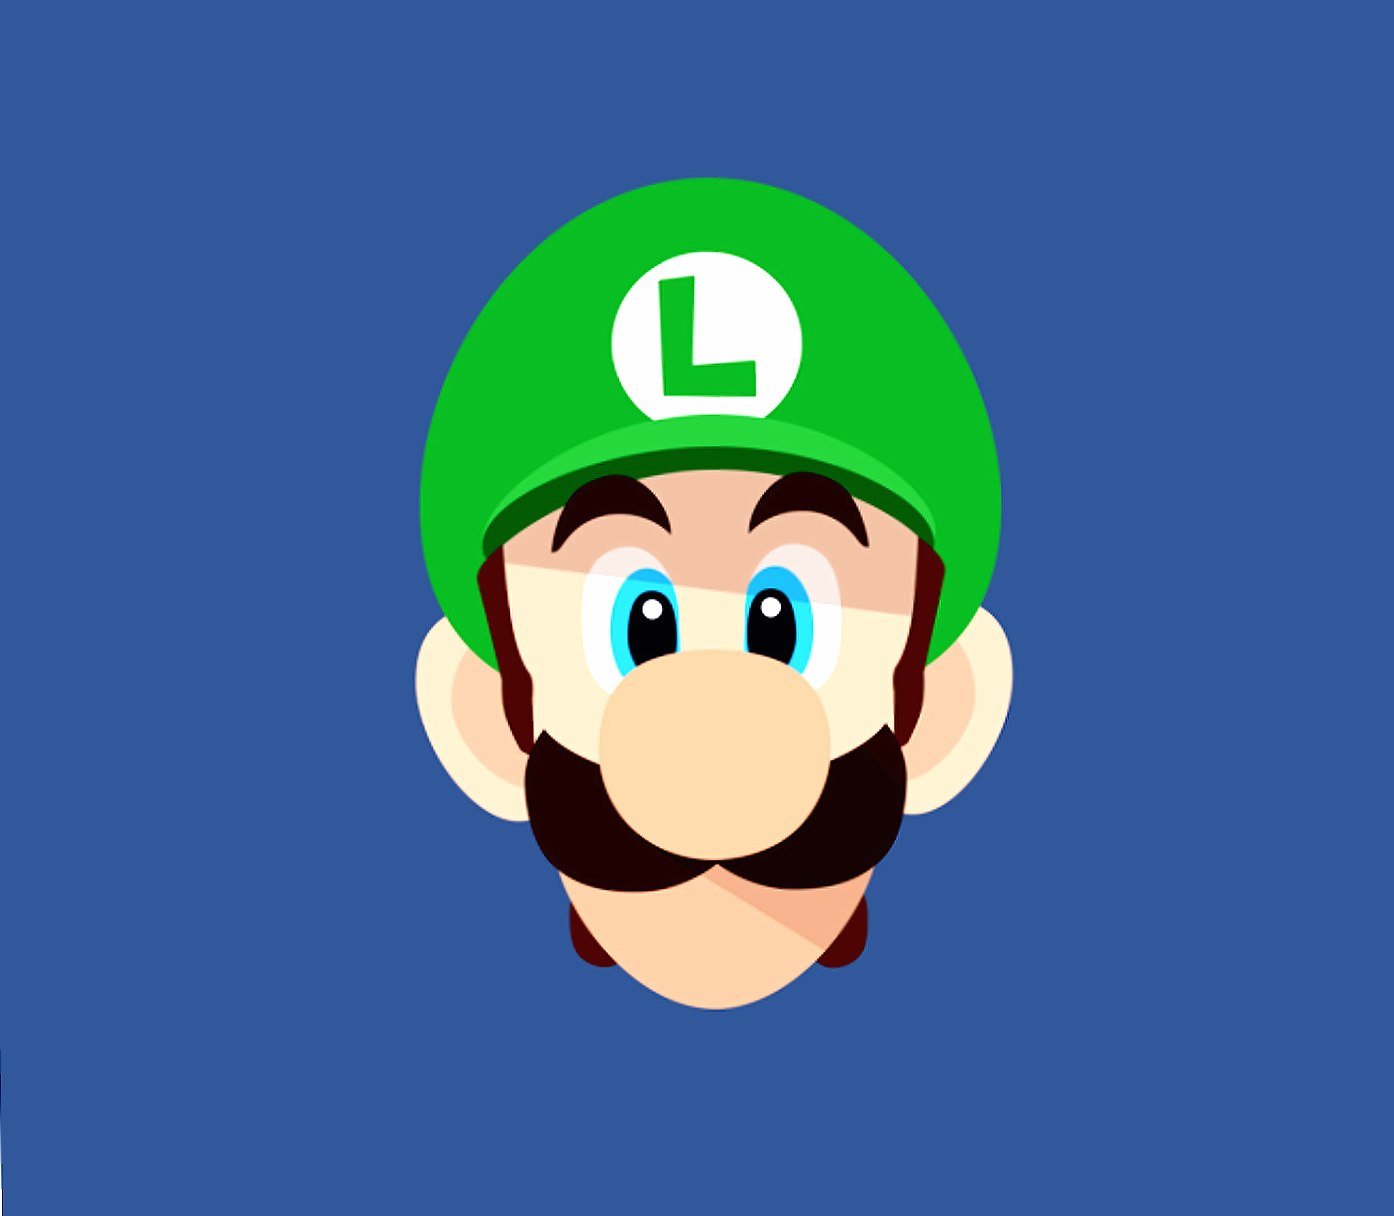 Luigi - Mario at 2048 x 2048 iPad size wallpapers HD quality